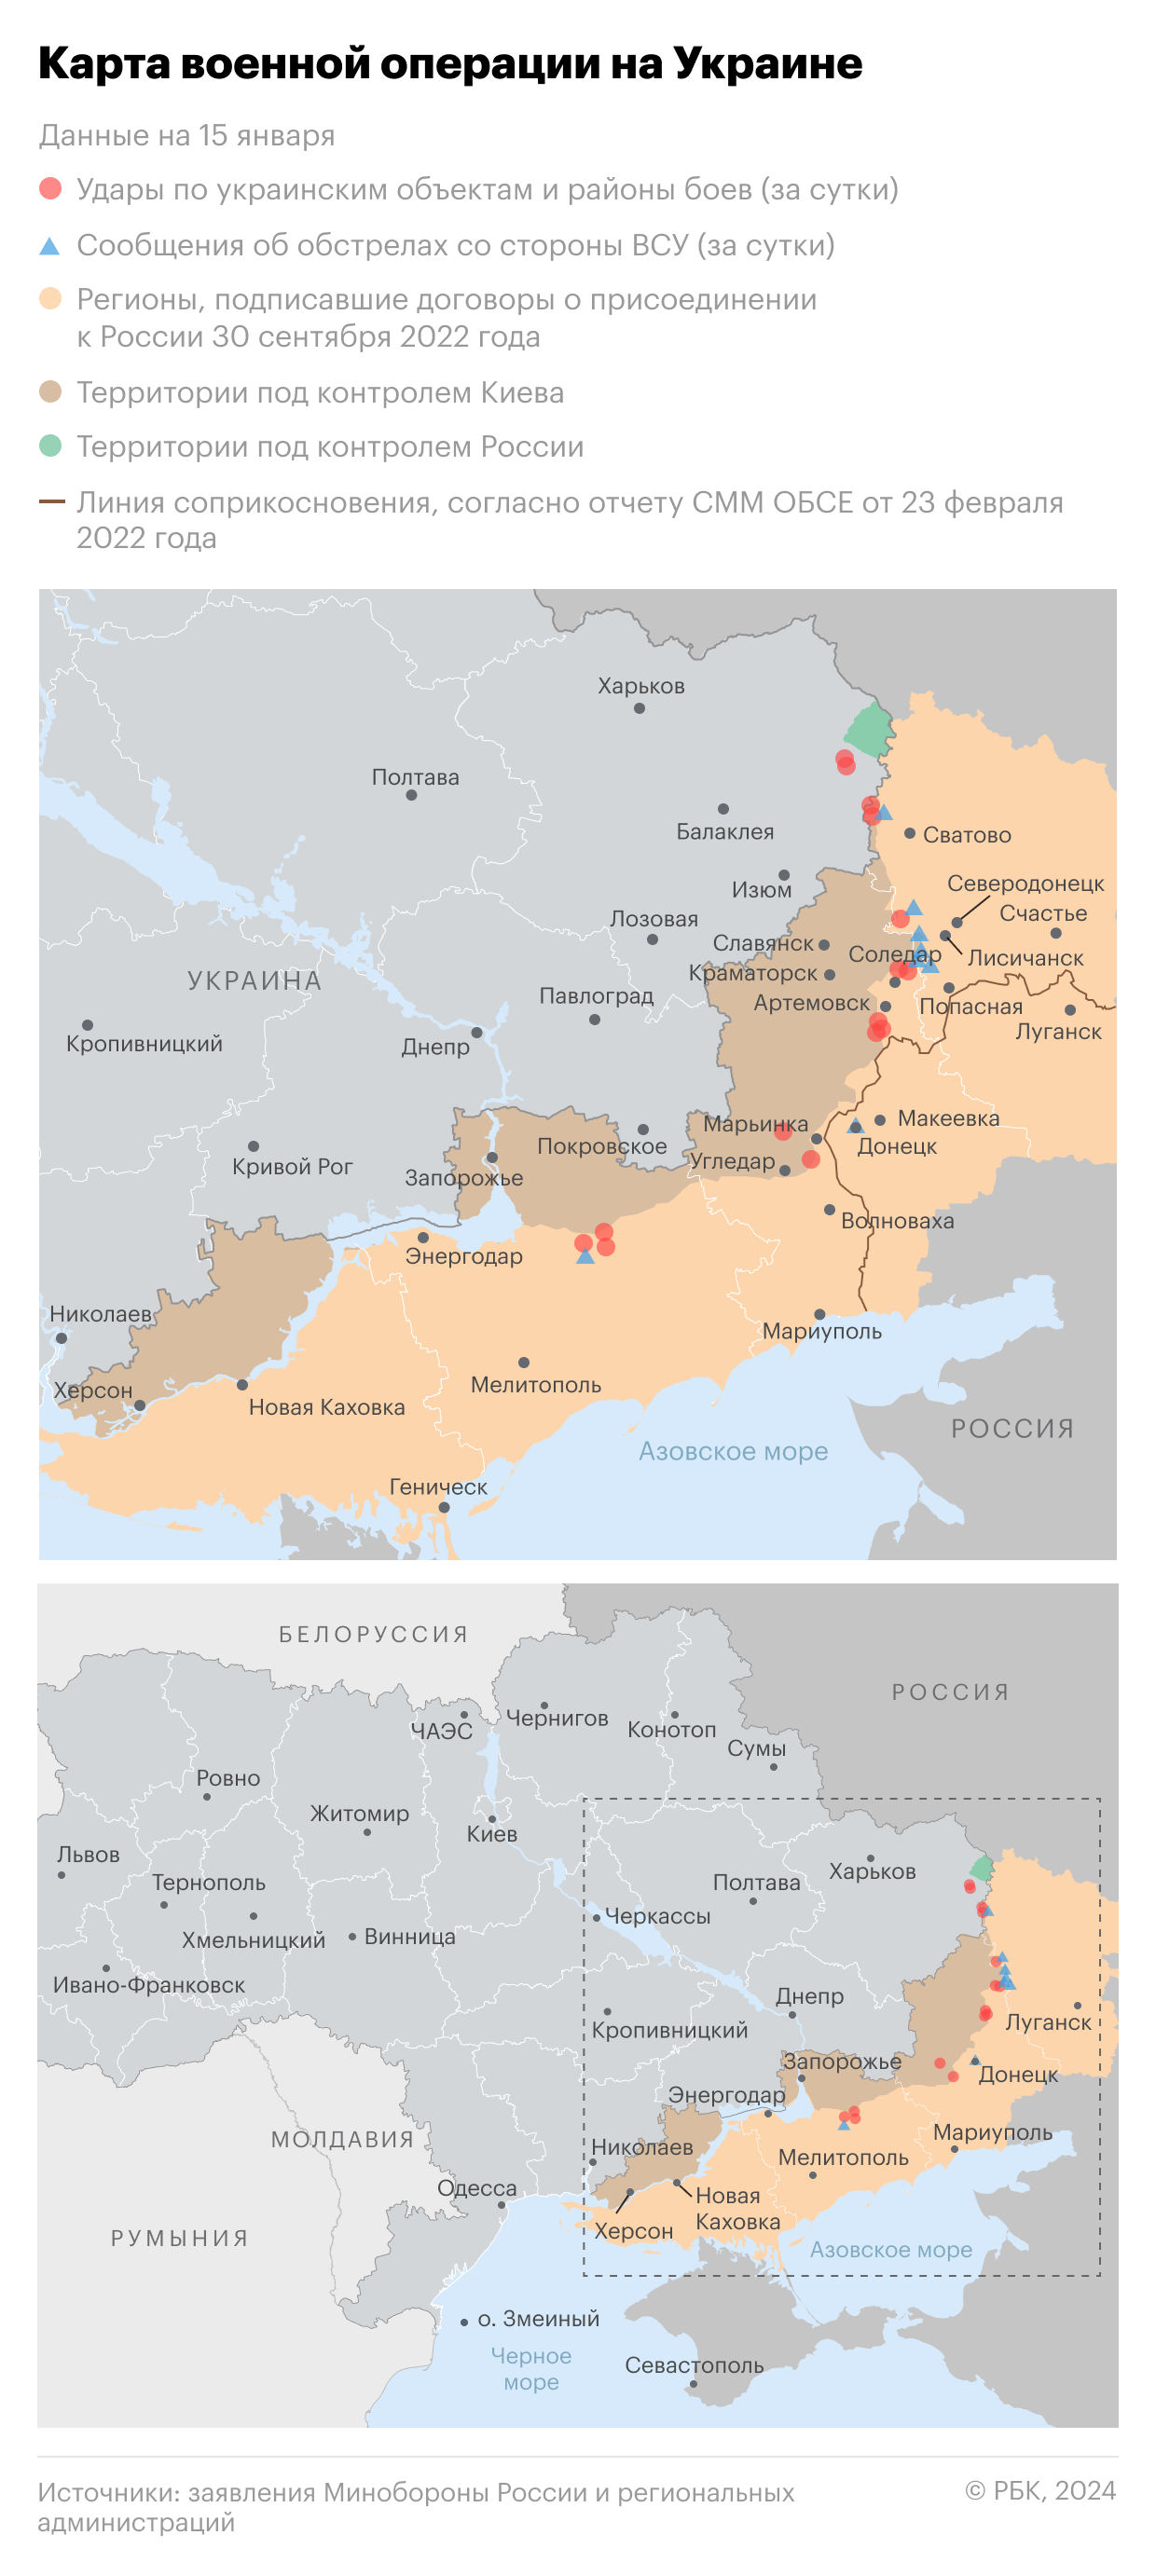 Военная операция на Украине. Карта на 15 января